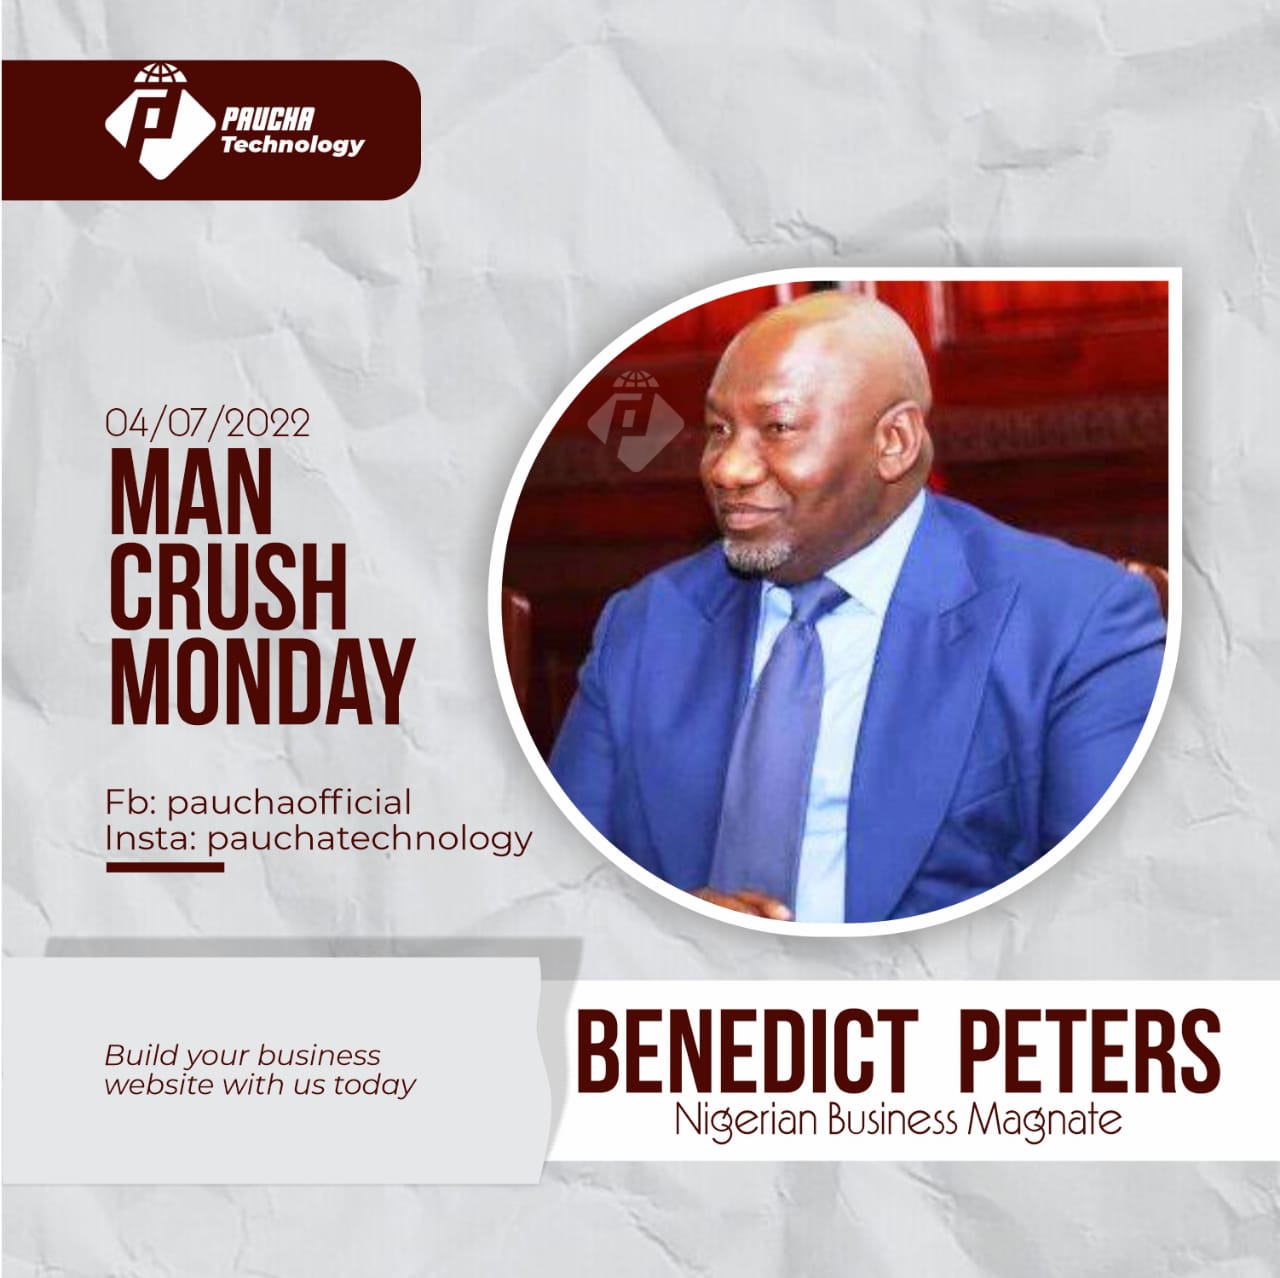 Man Crush Monday: Benedict Peters (Nigerian Business Magnate)